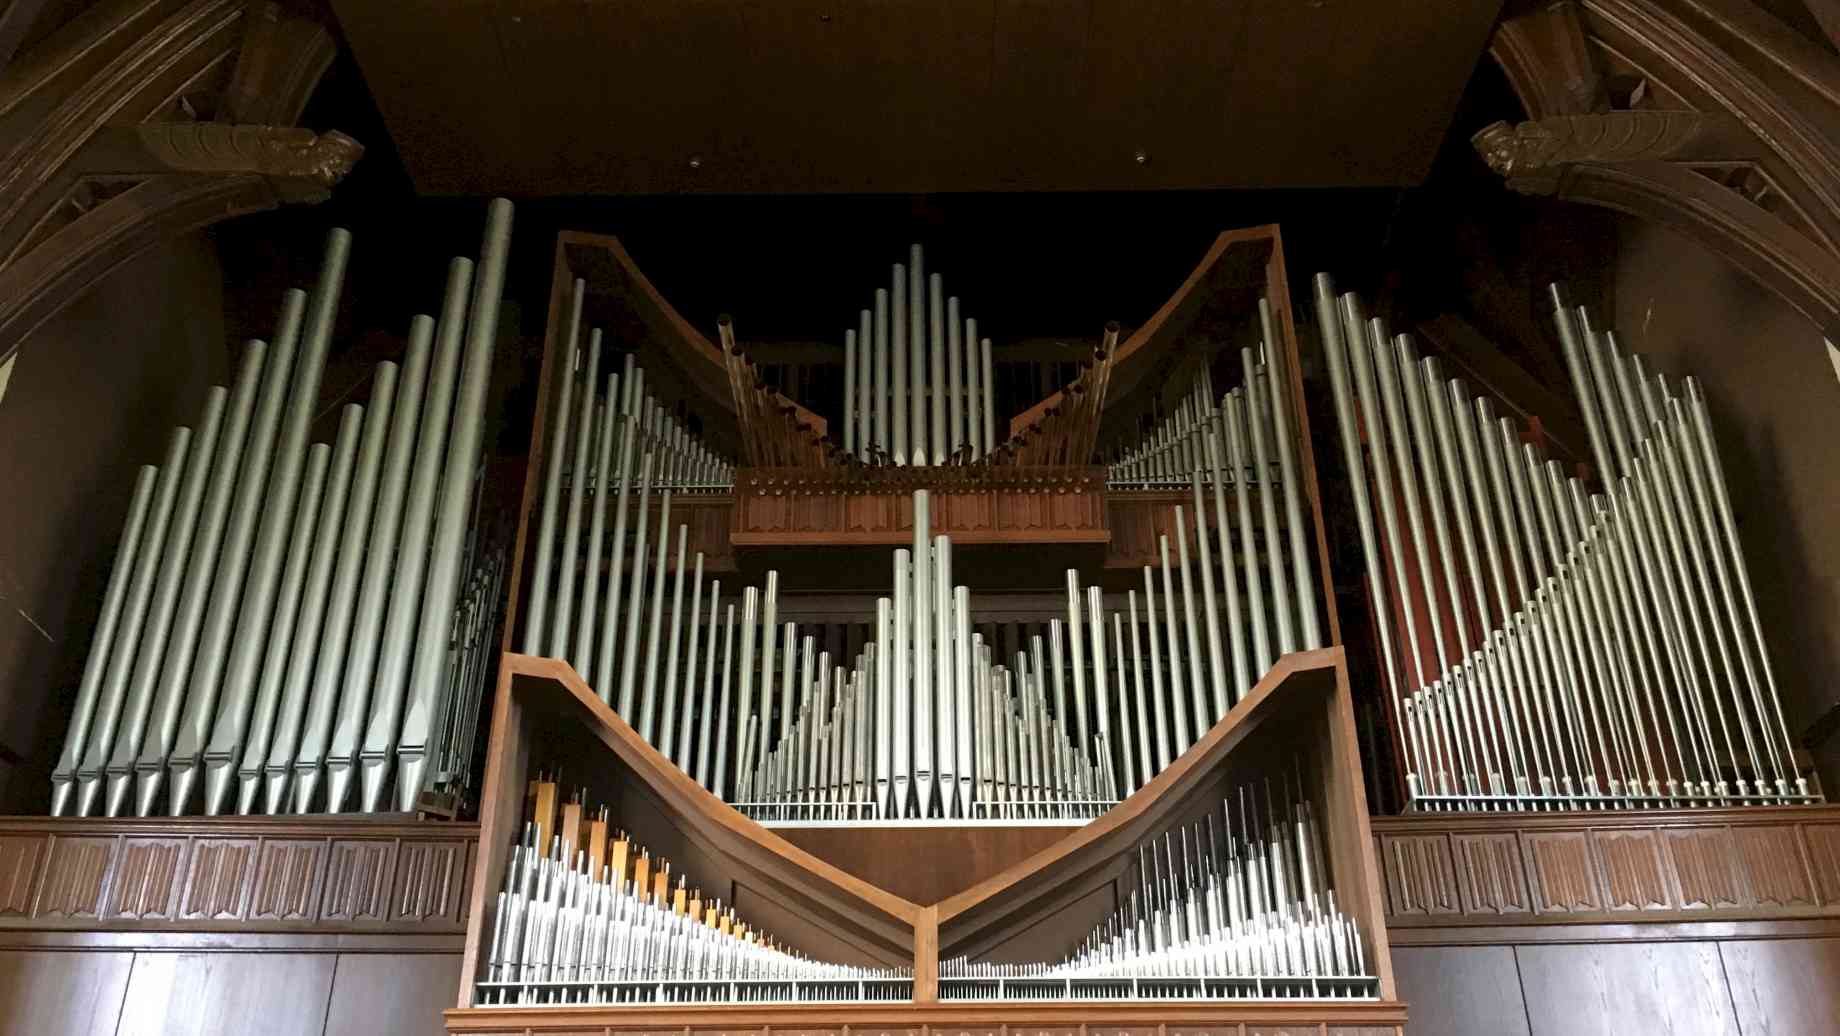 UA Organ Pipes